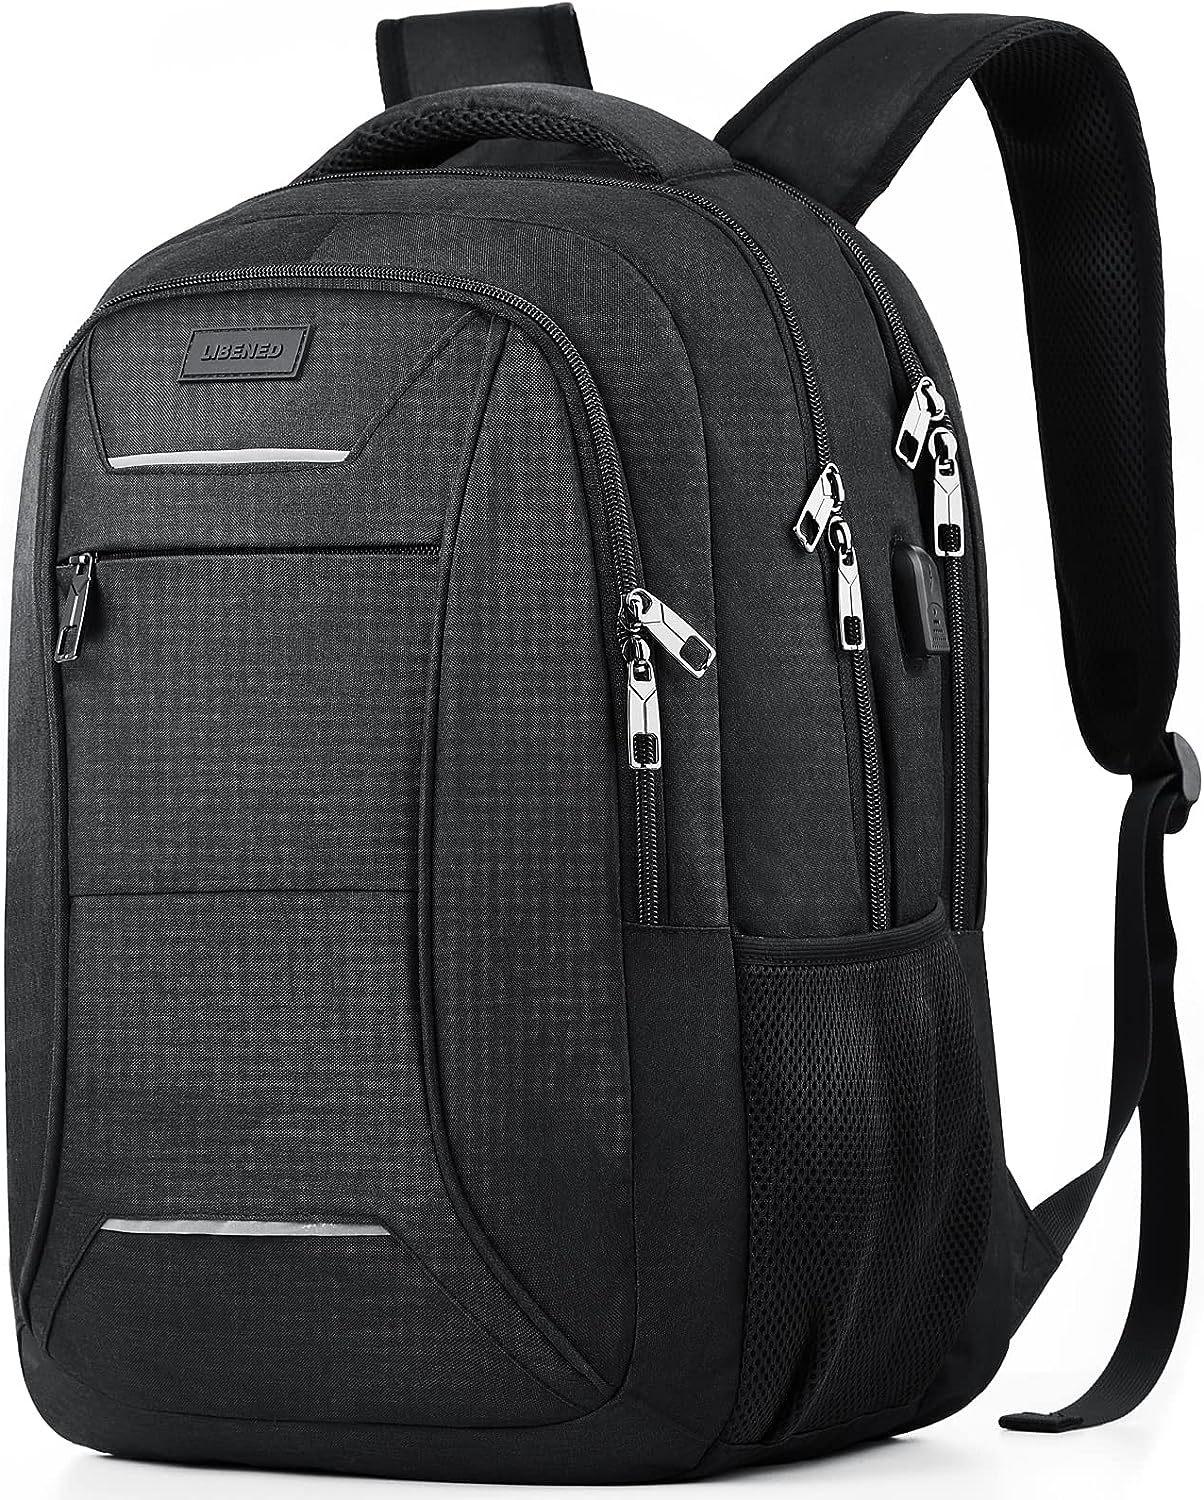 Bikrod School Backpack